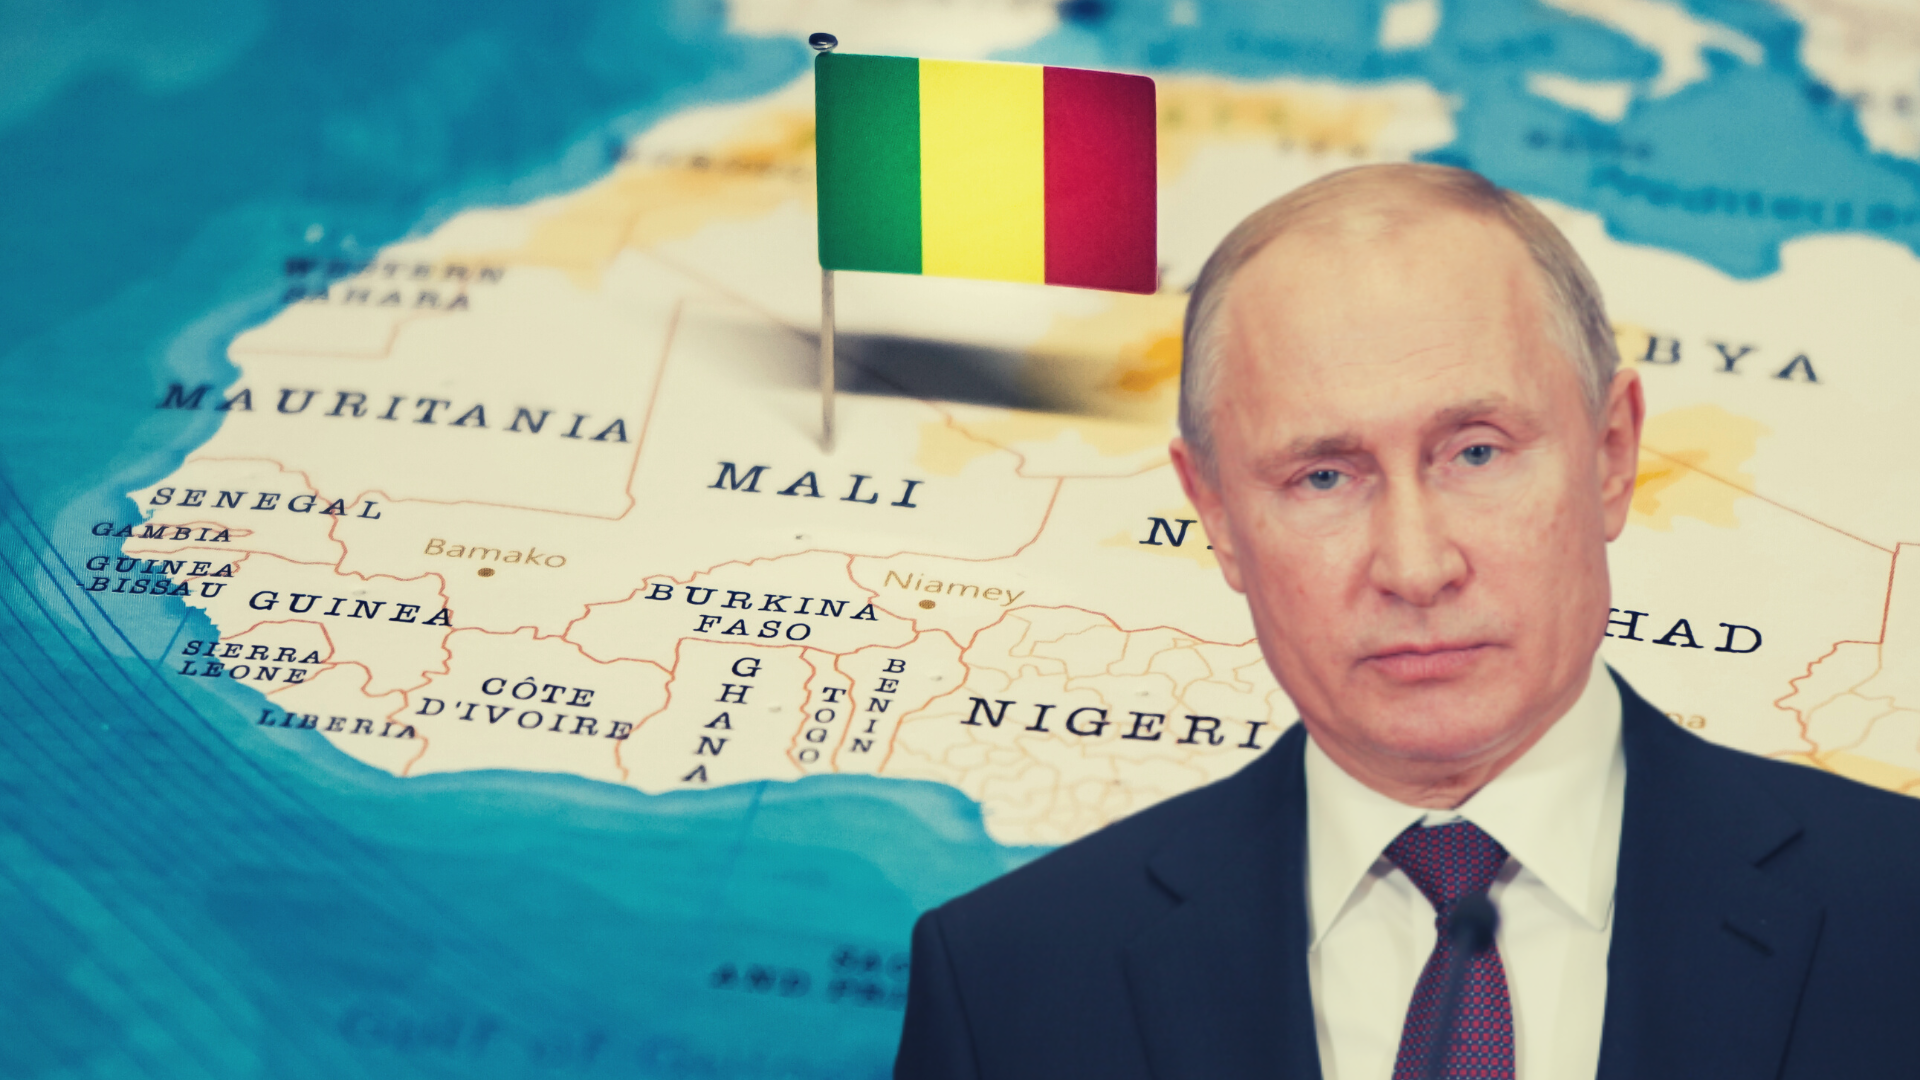 Putin_Africa_mali.png